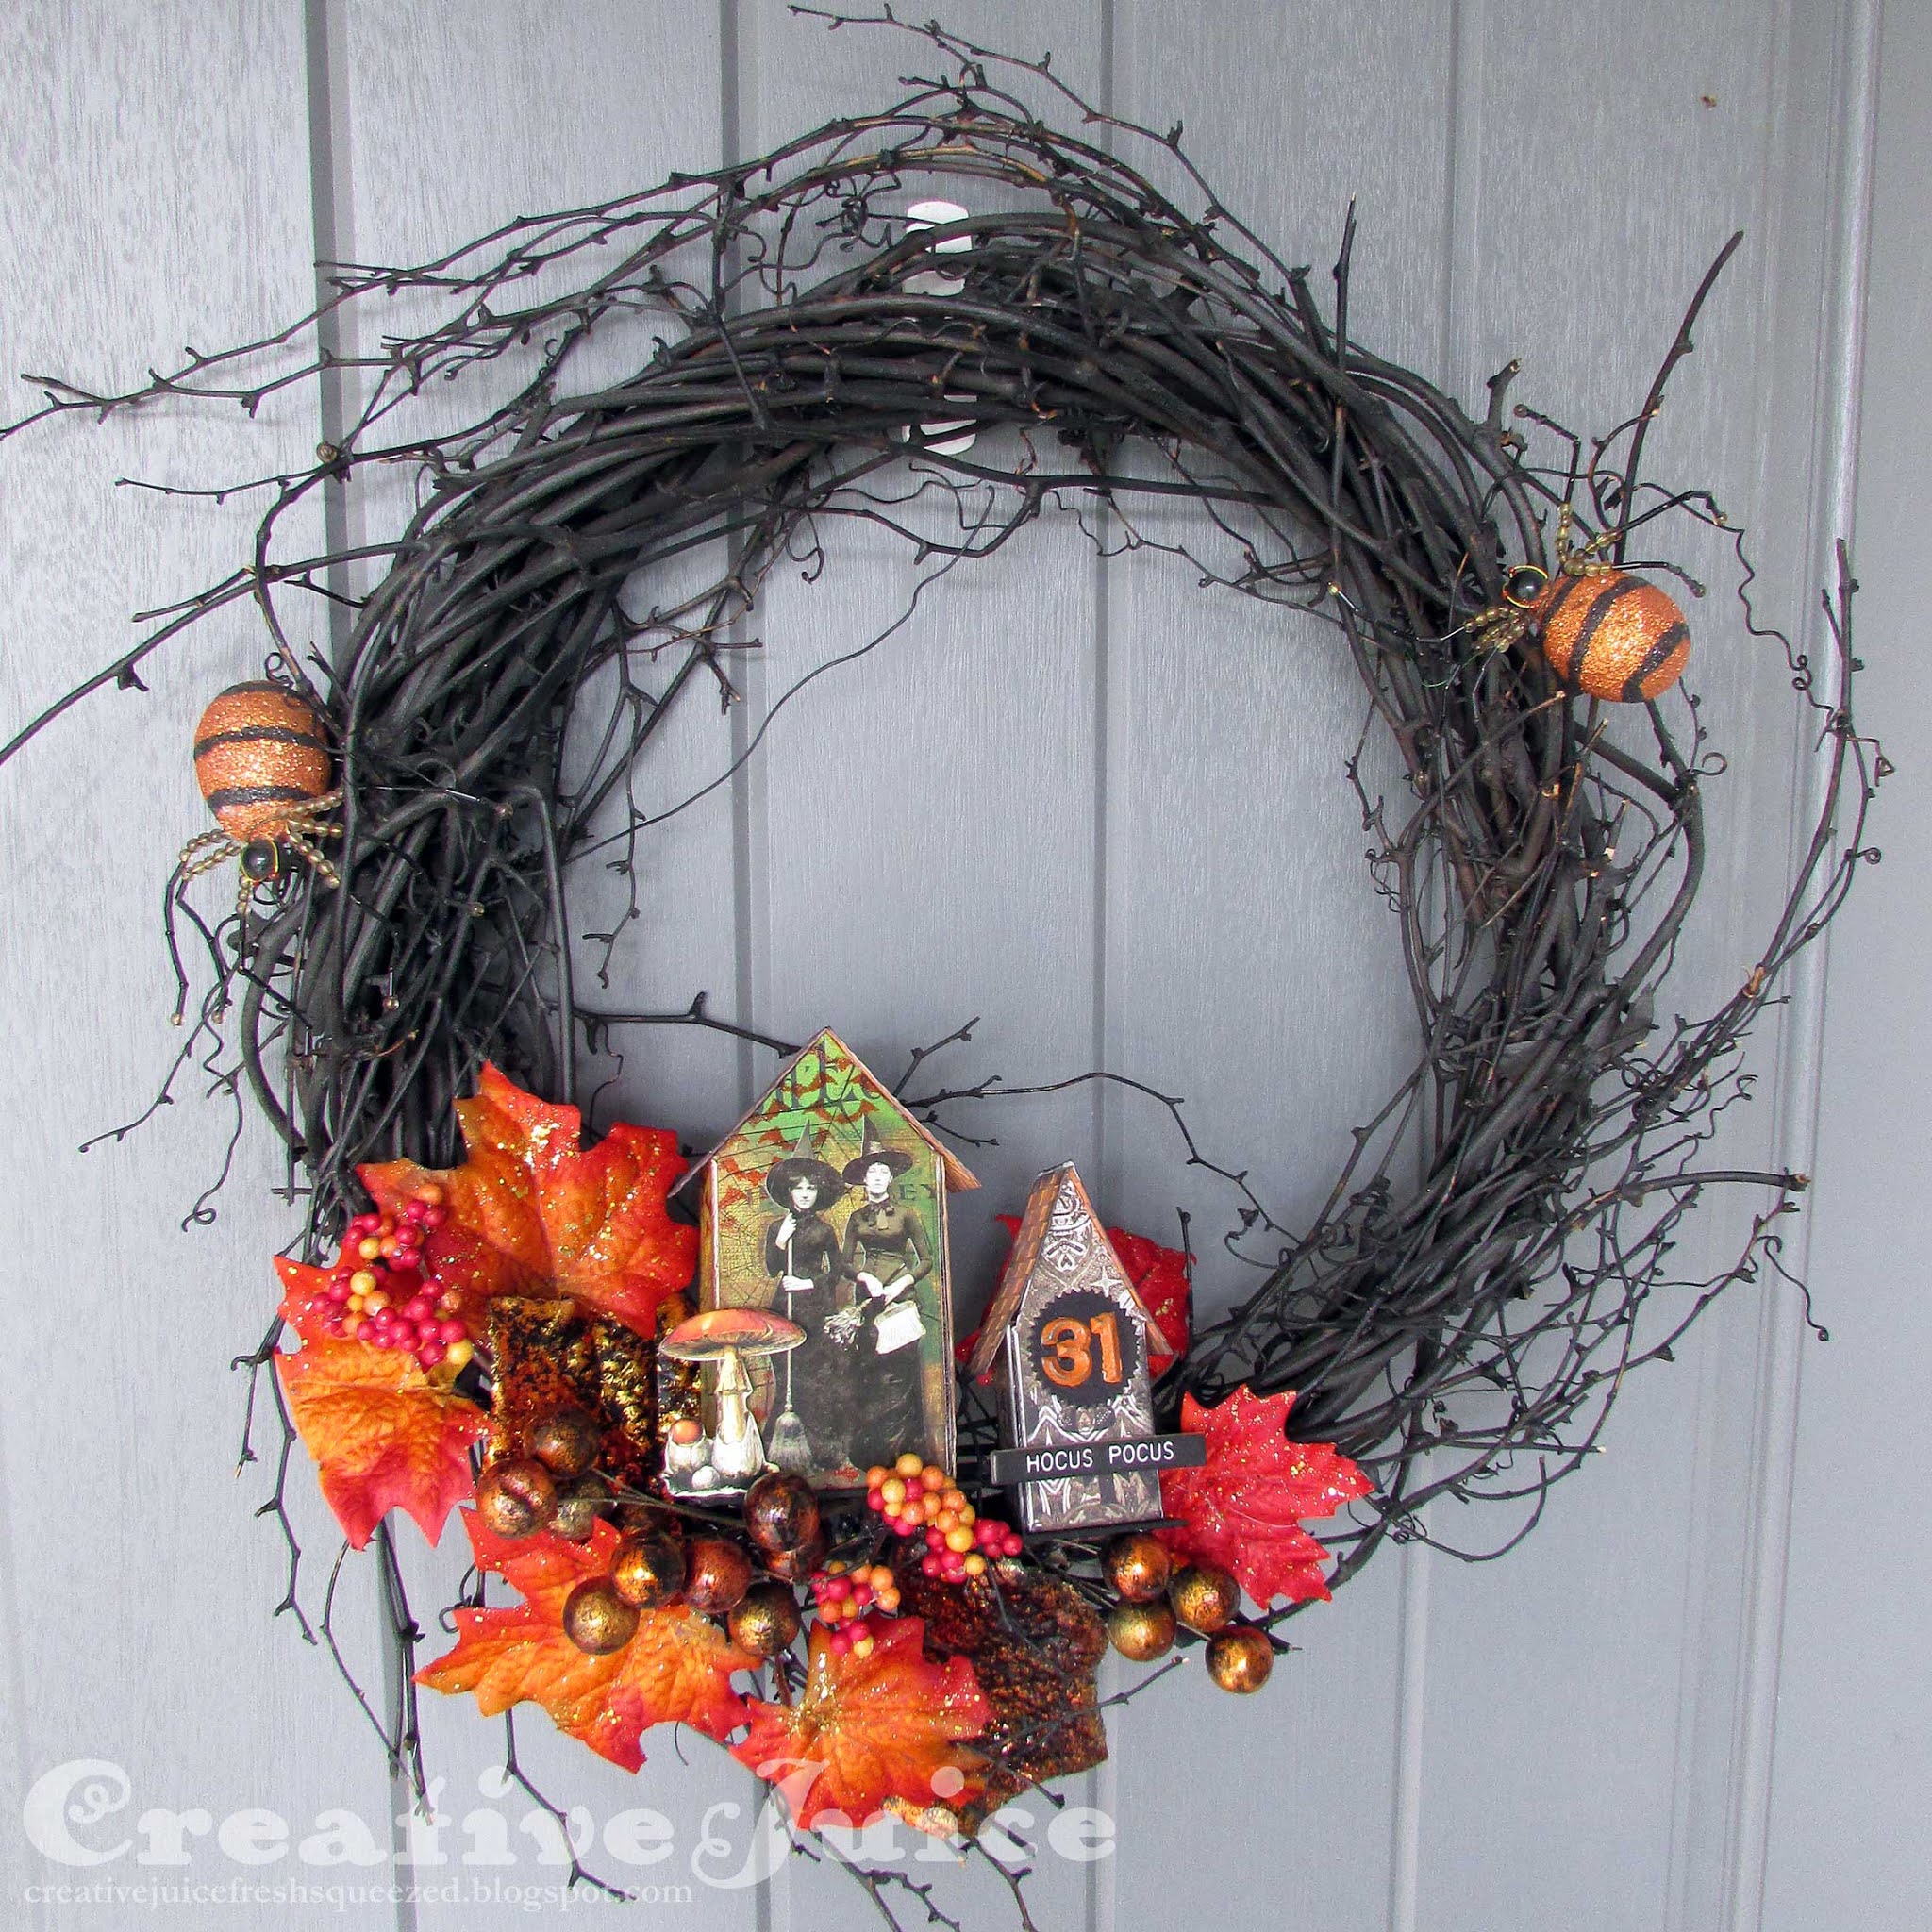 Creative Juice: I Needed a New Halloween Wreath!